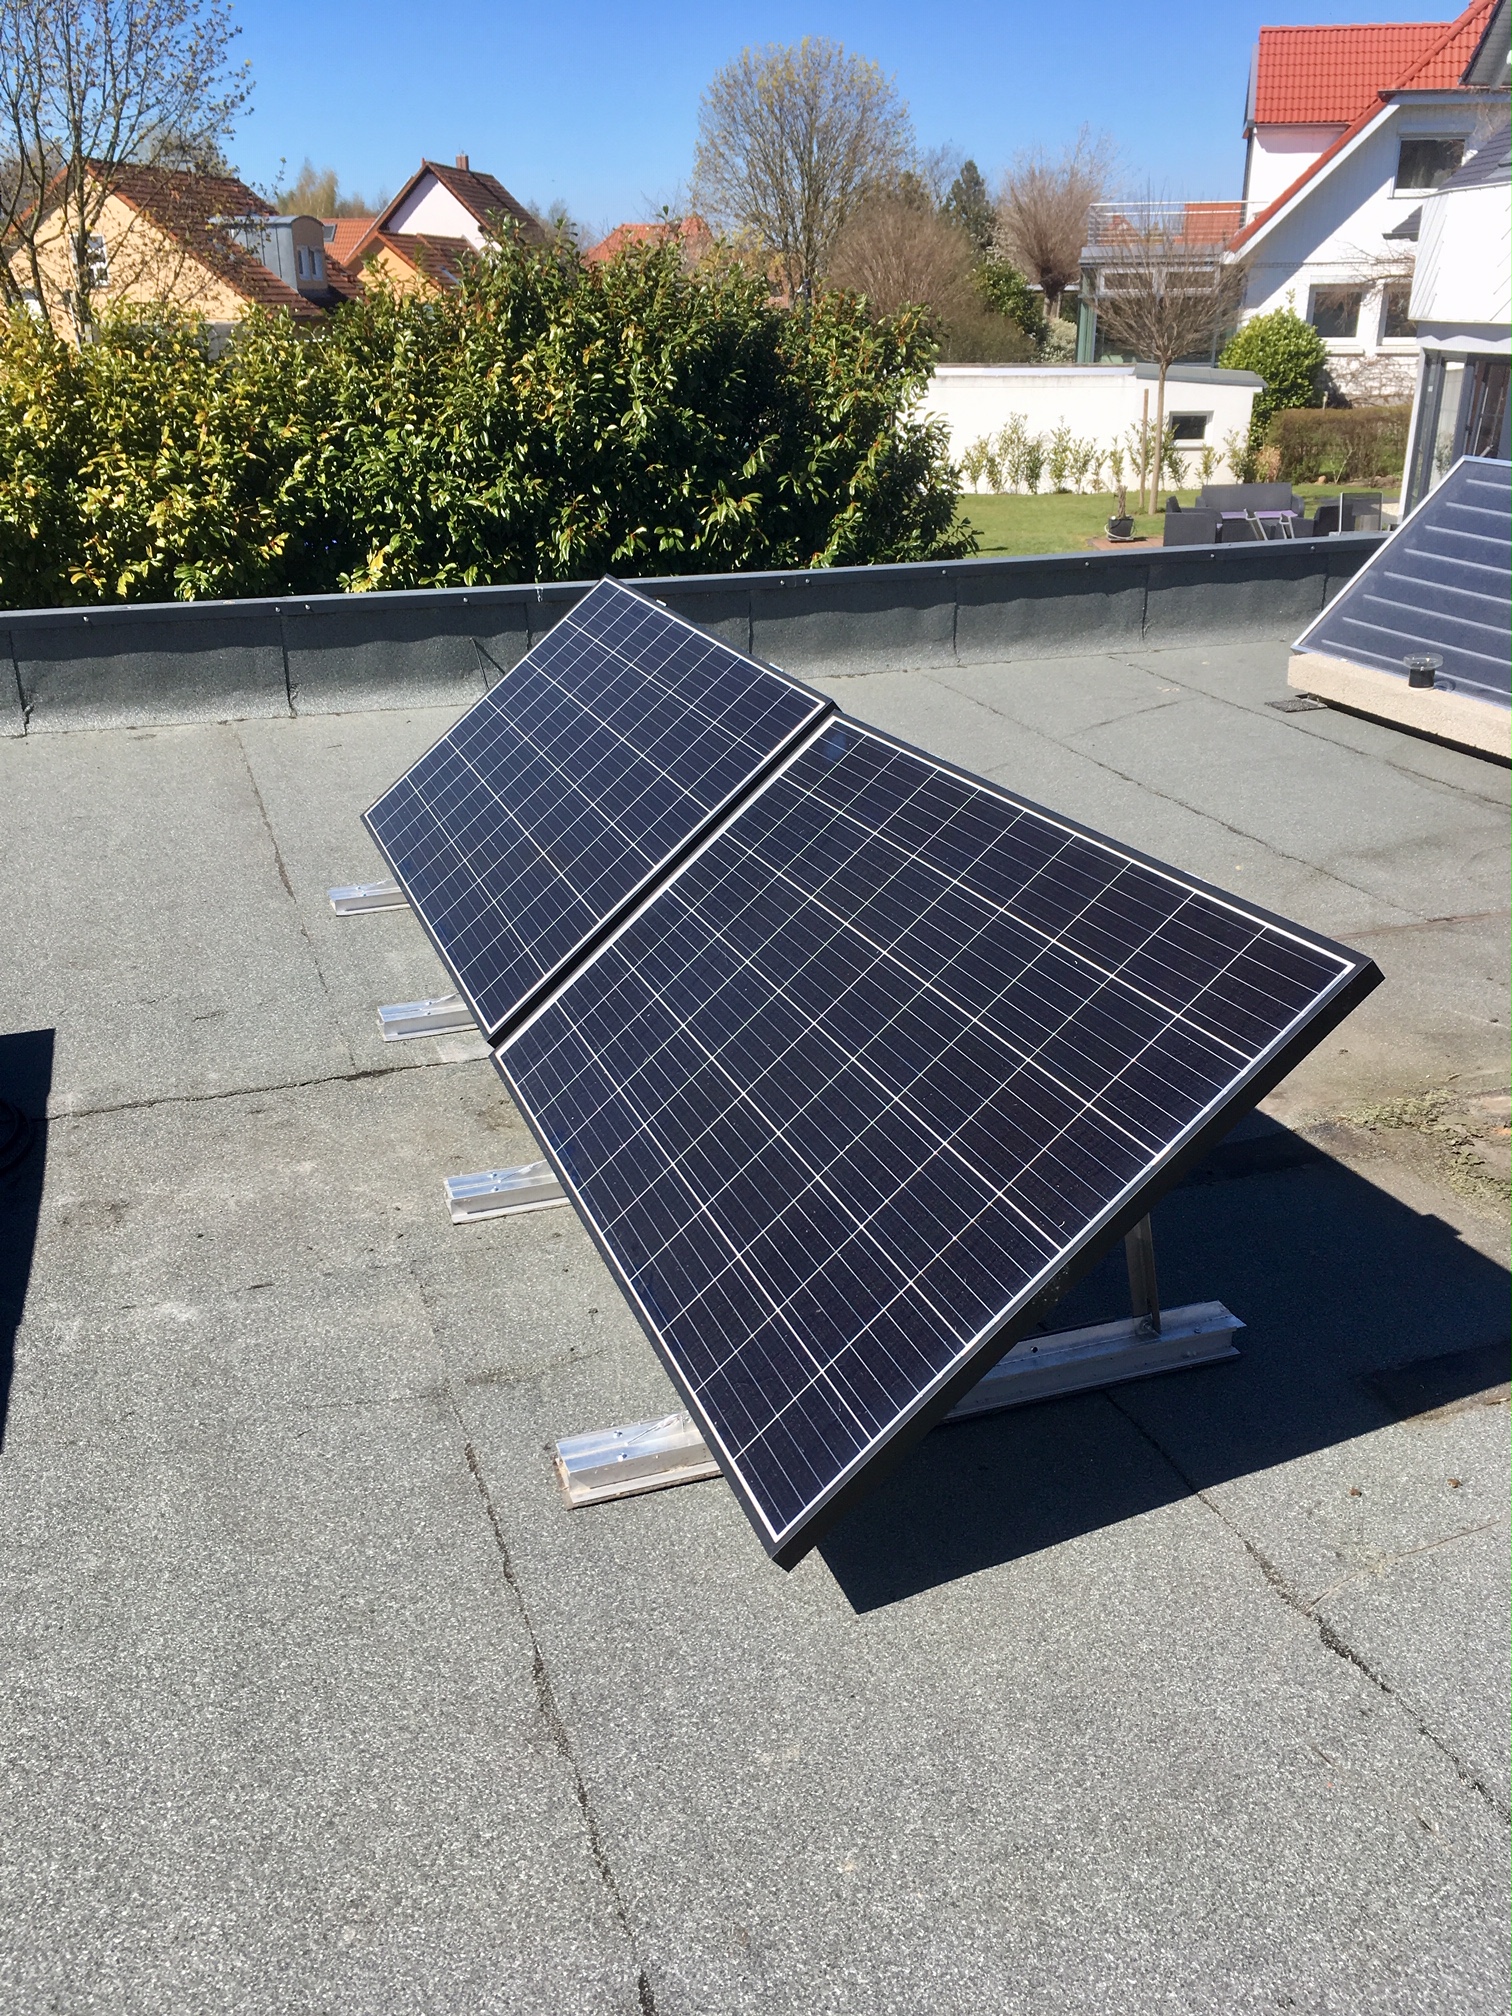 3200 Solaranlage / Photovoltaikanlage - Plug & Play zur Selbstmontage ›  Balkonkraftwerk - Steckdosen-Solaranlage